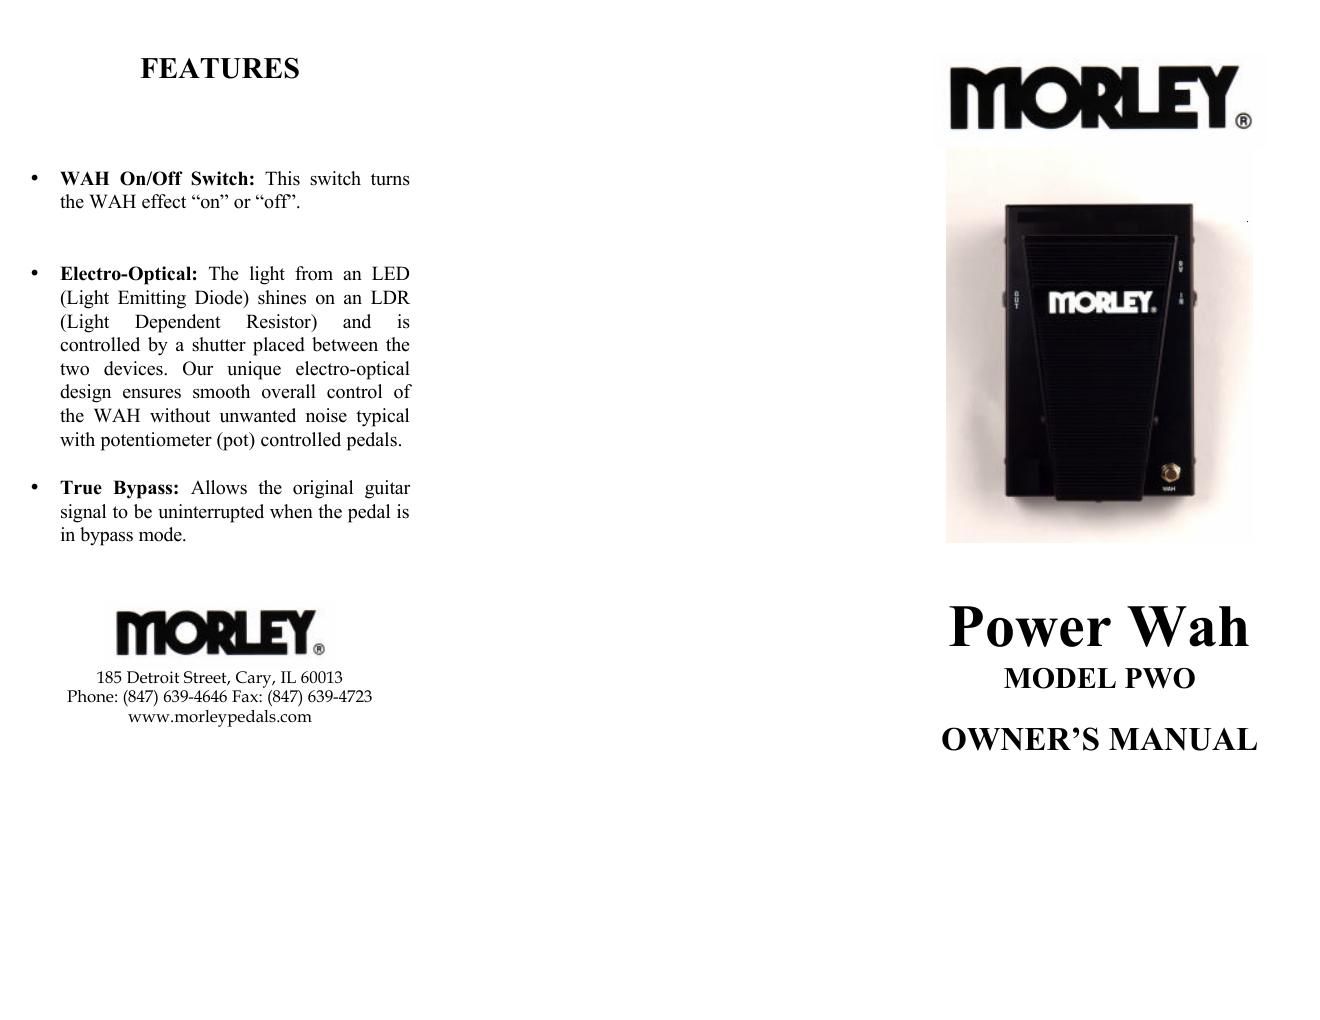 morley pwo power wah new